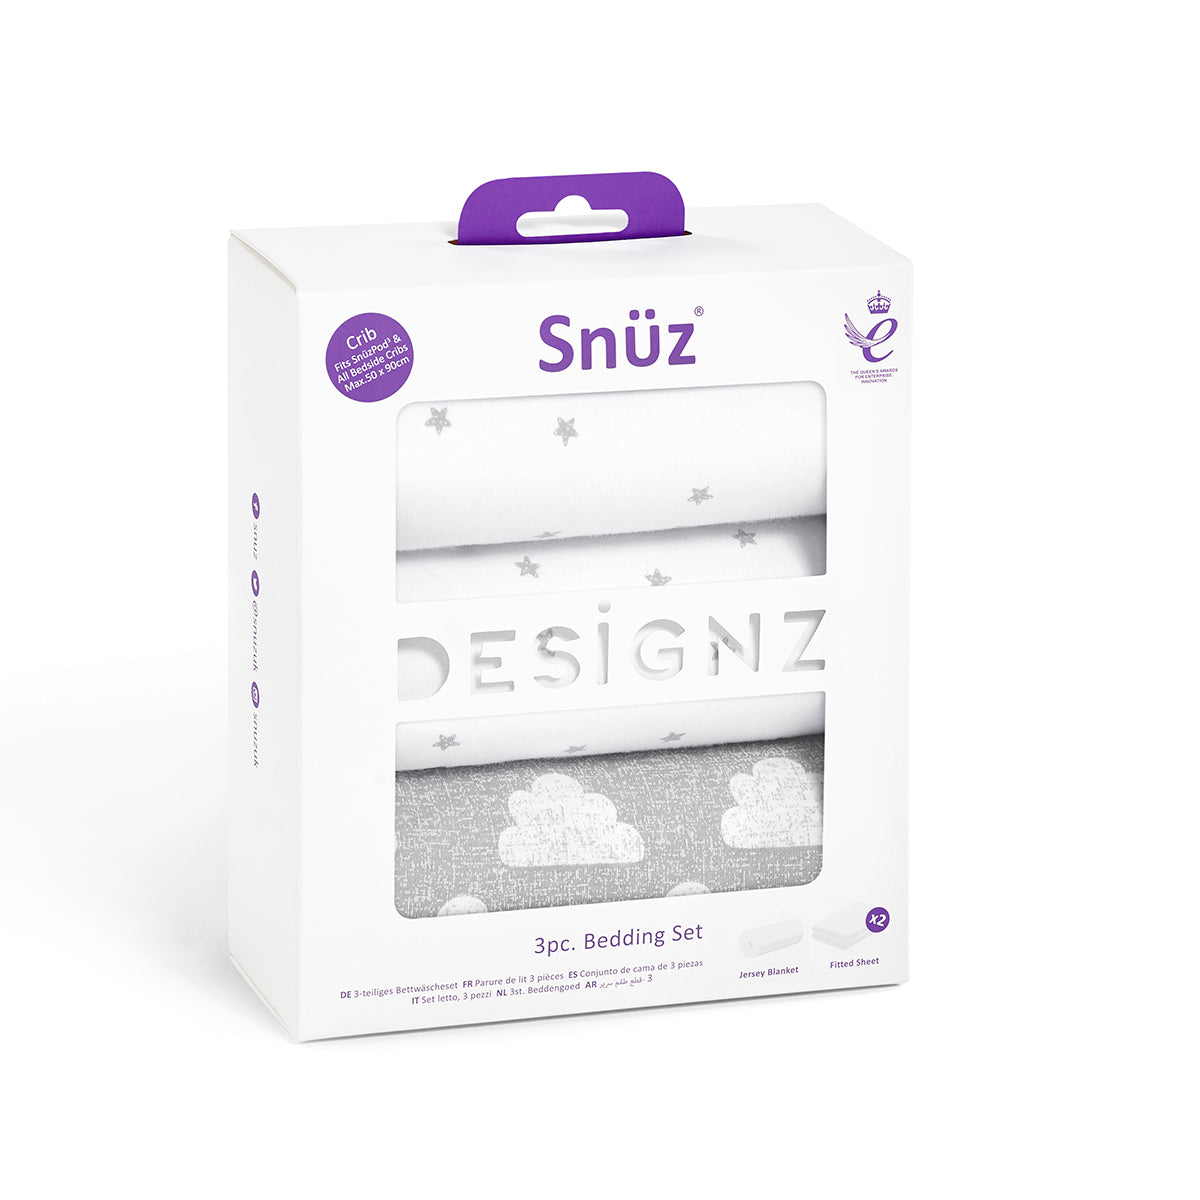 Snuz 3pc. Bedding Set - Crib Cloud